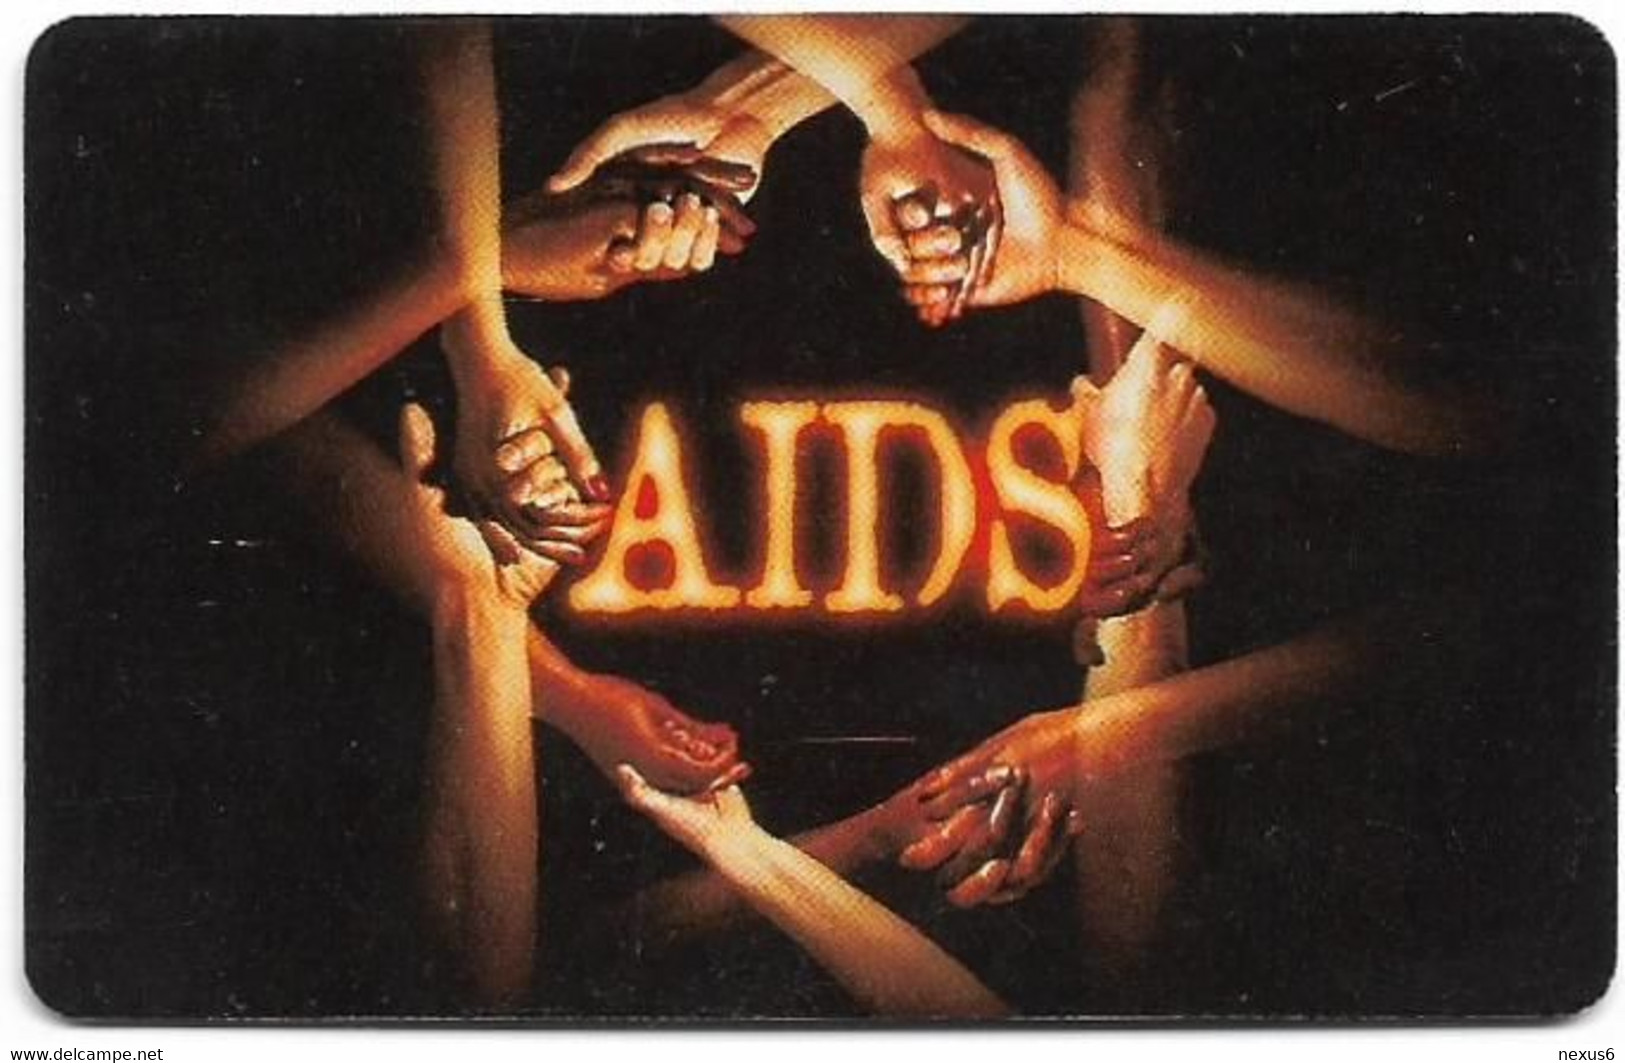 Namibia - Telecom Namibia - Aids, Spread The Word - A Killer Among Us, 10$, 1999, Used - Namibia